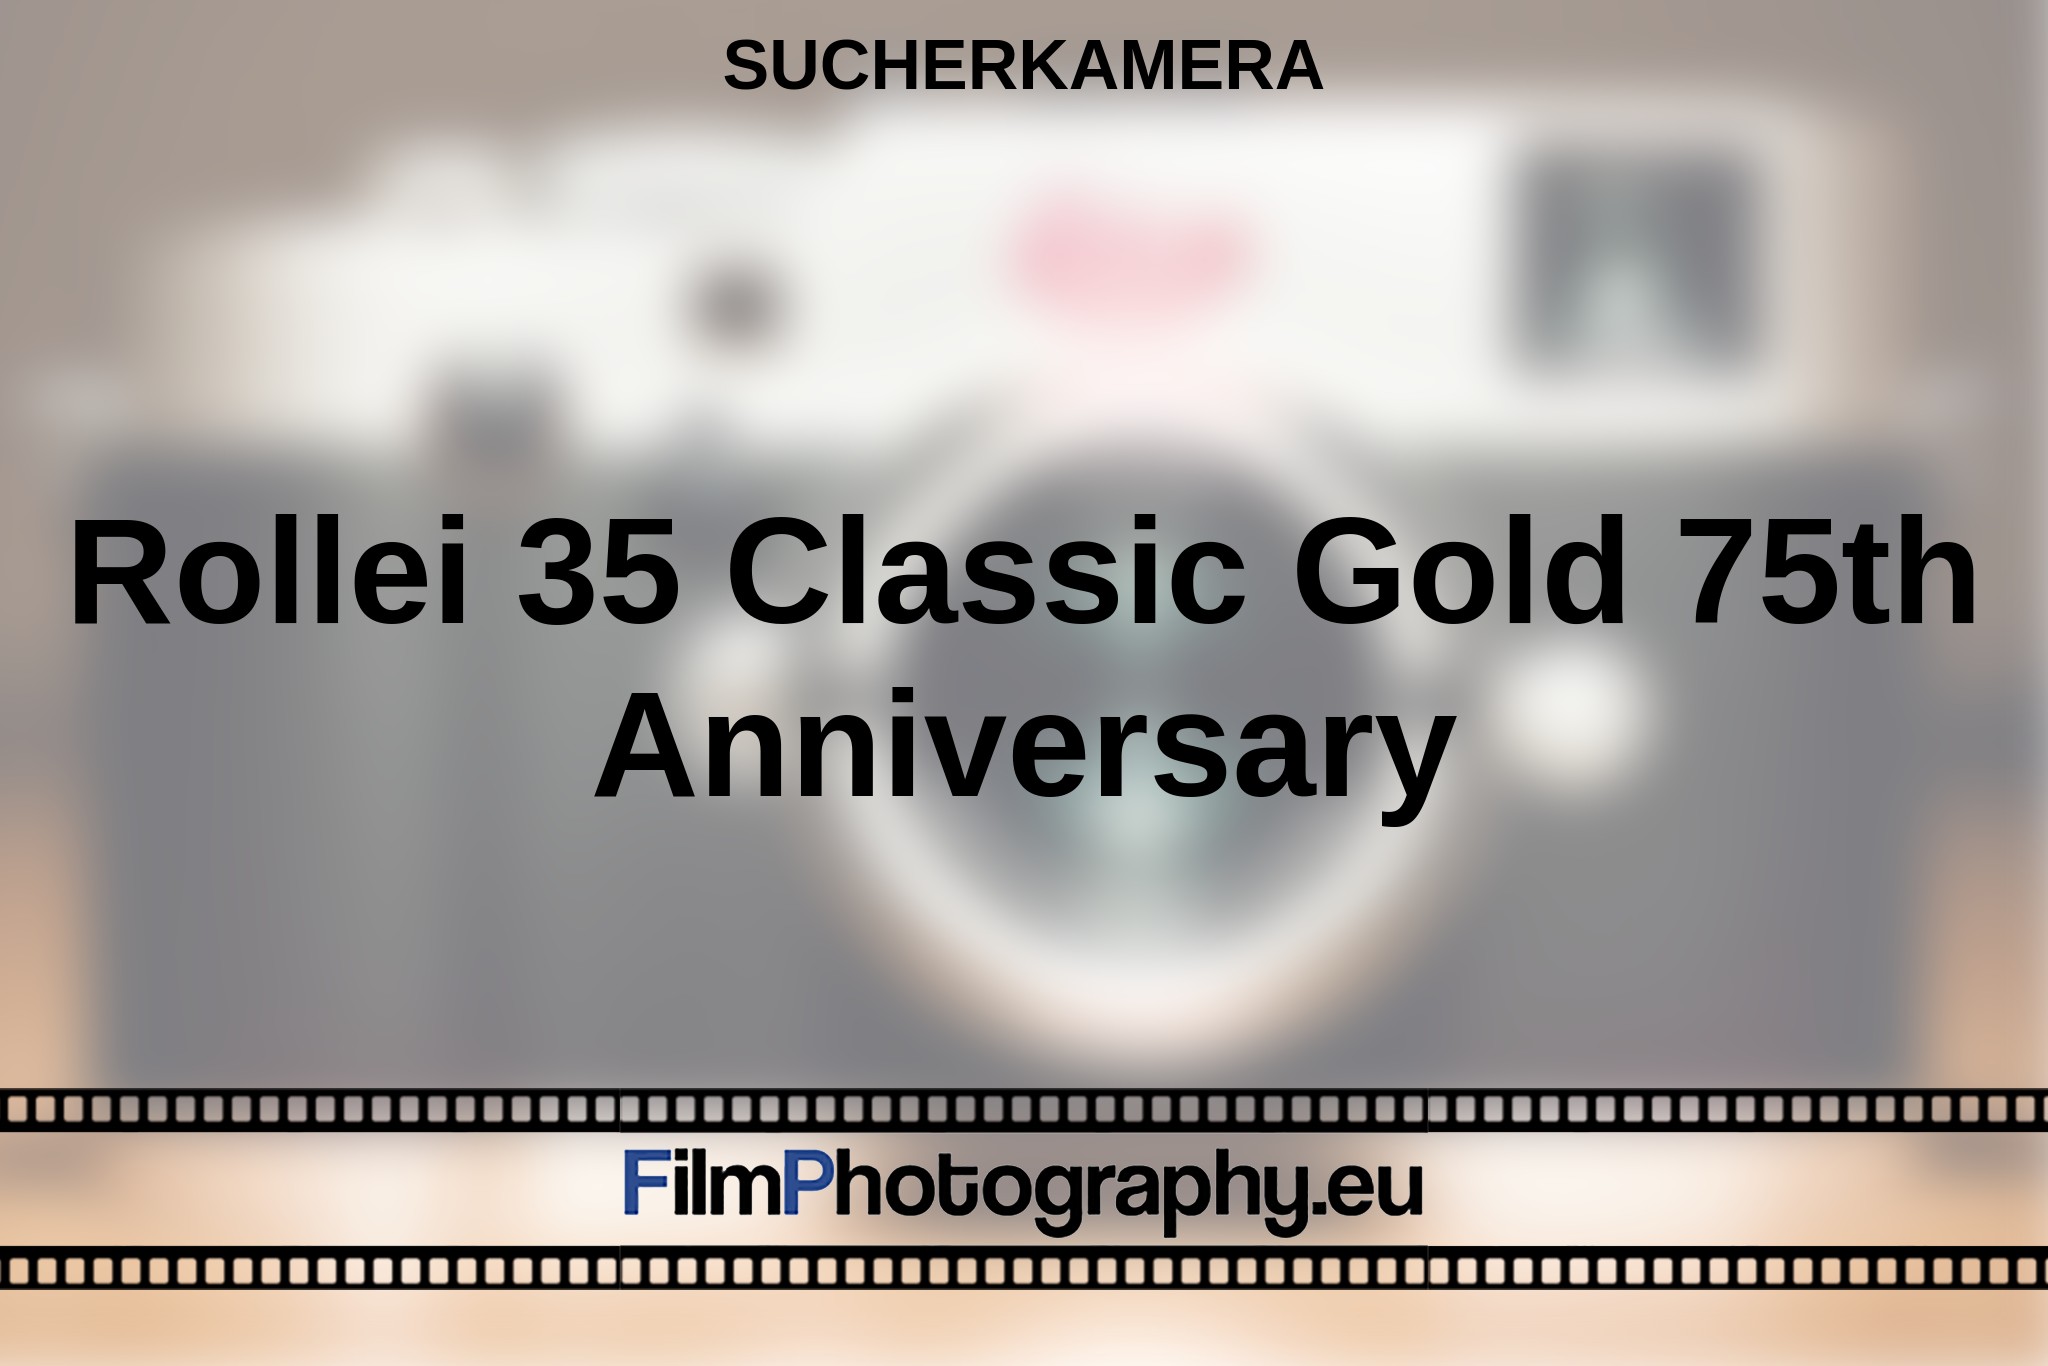 rollei-35-classic-gold-75th-anniversary-sucherkamera-bnv.jpg